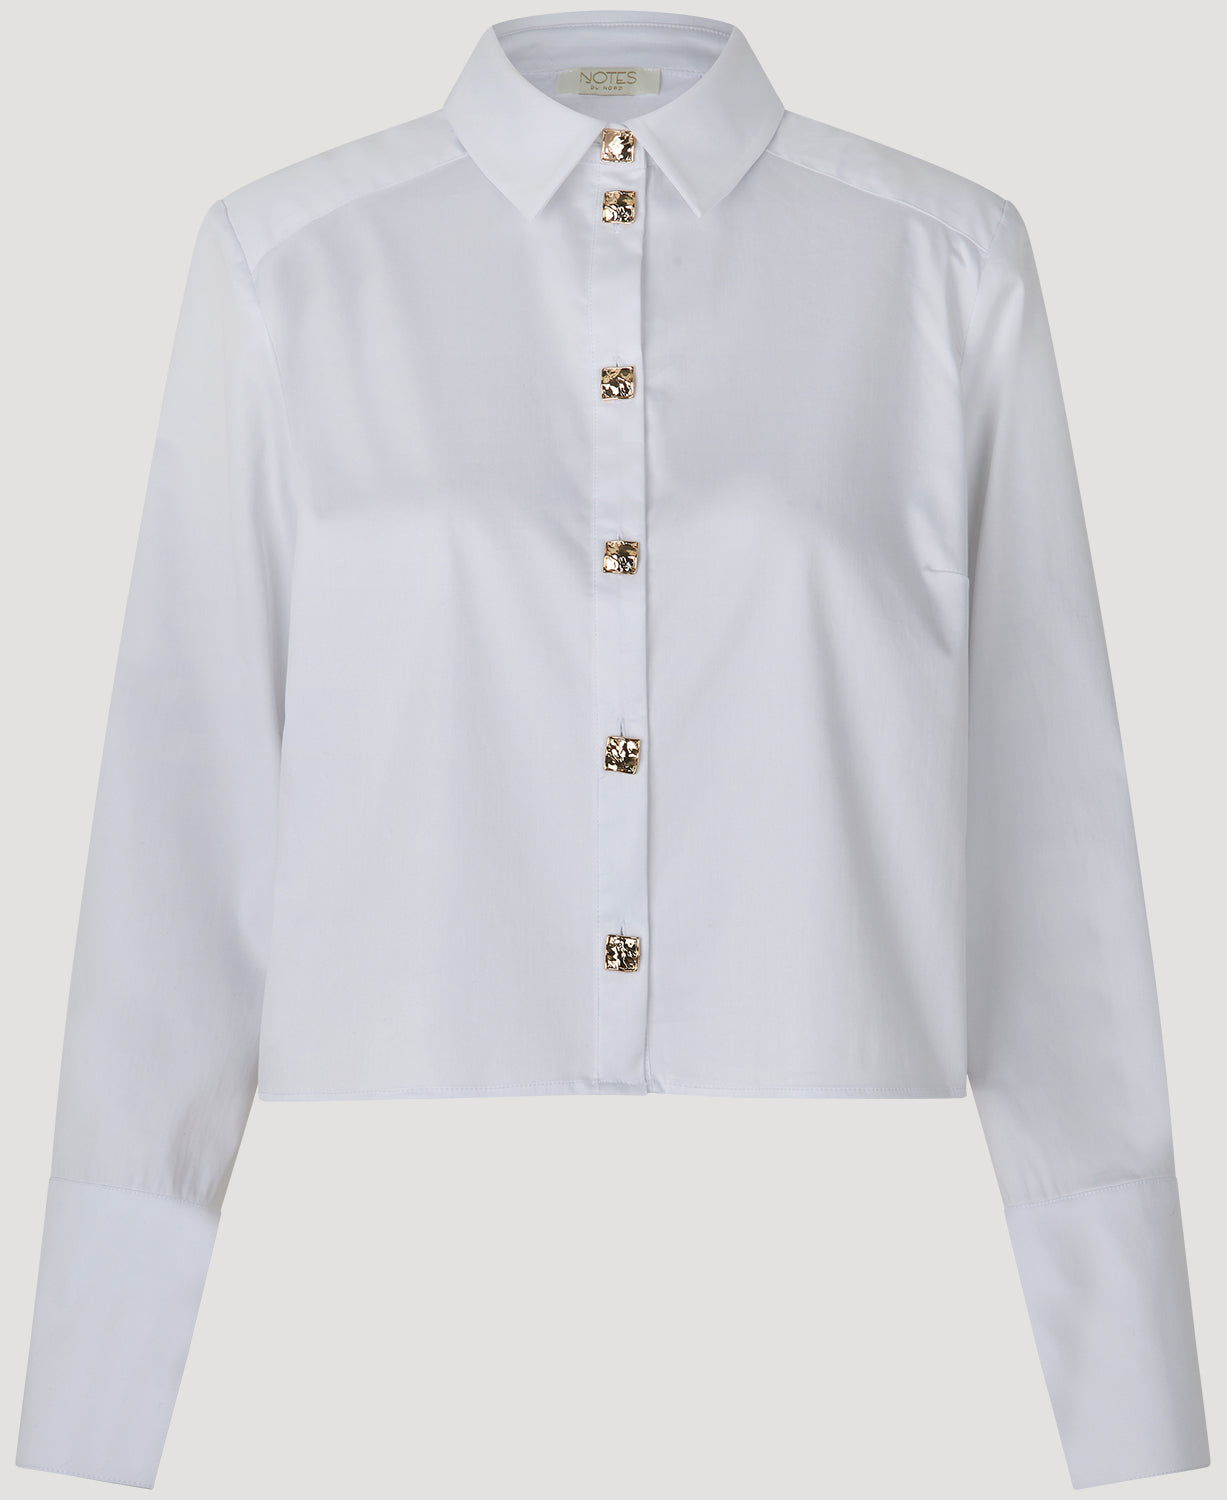 Notes du Nord Ibi Shoulder Pad Shirt Shirt 001 White